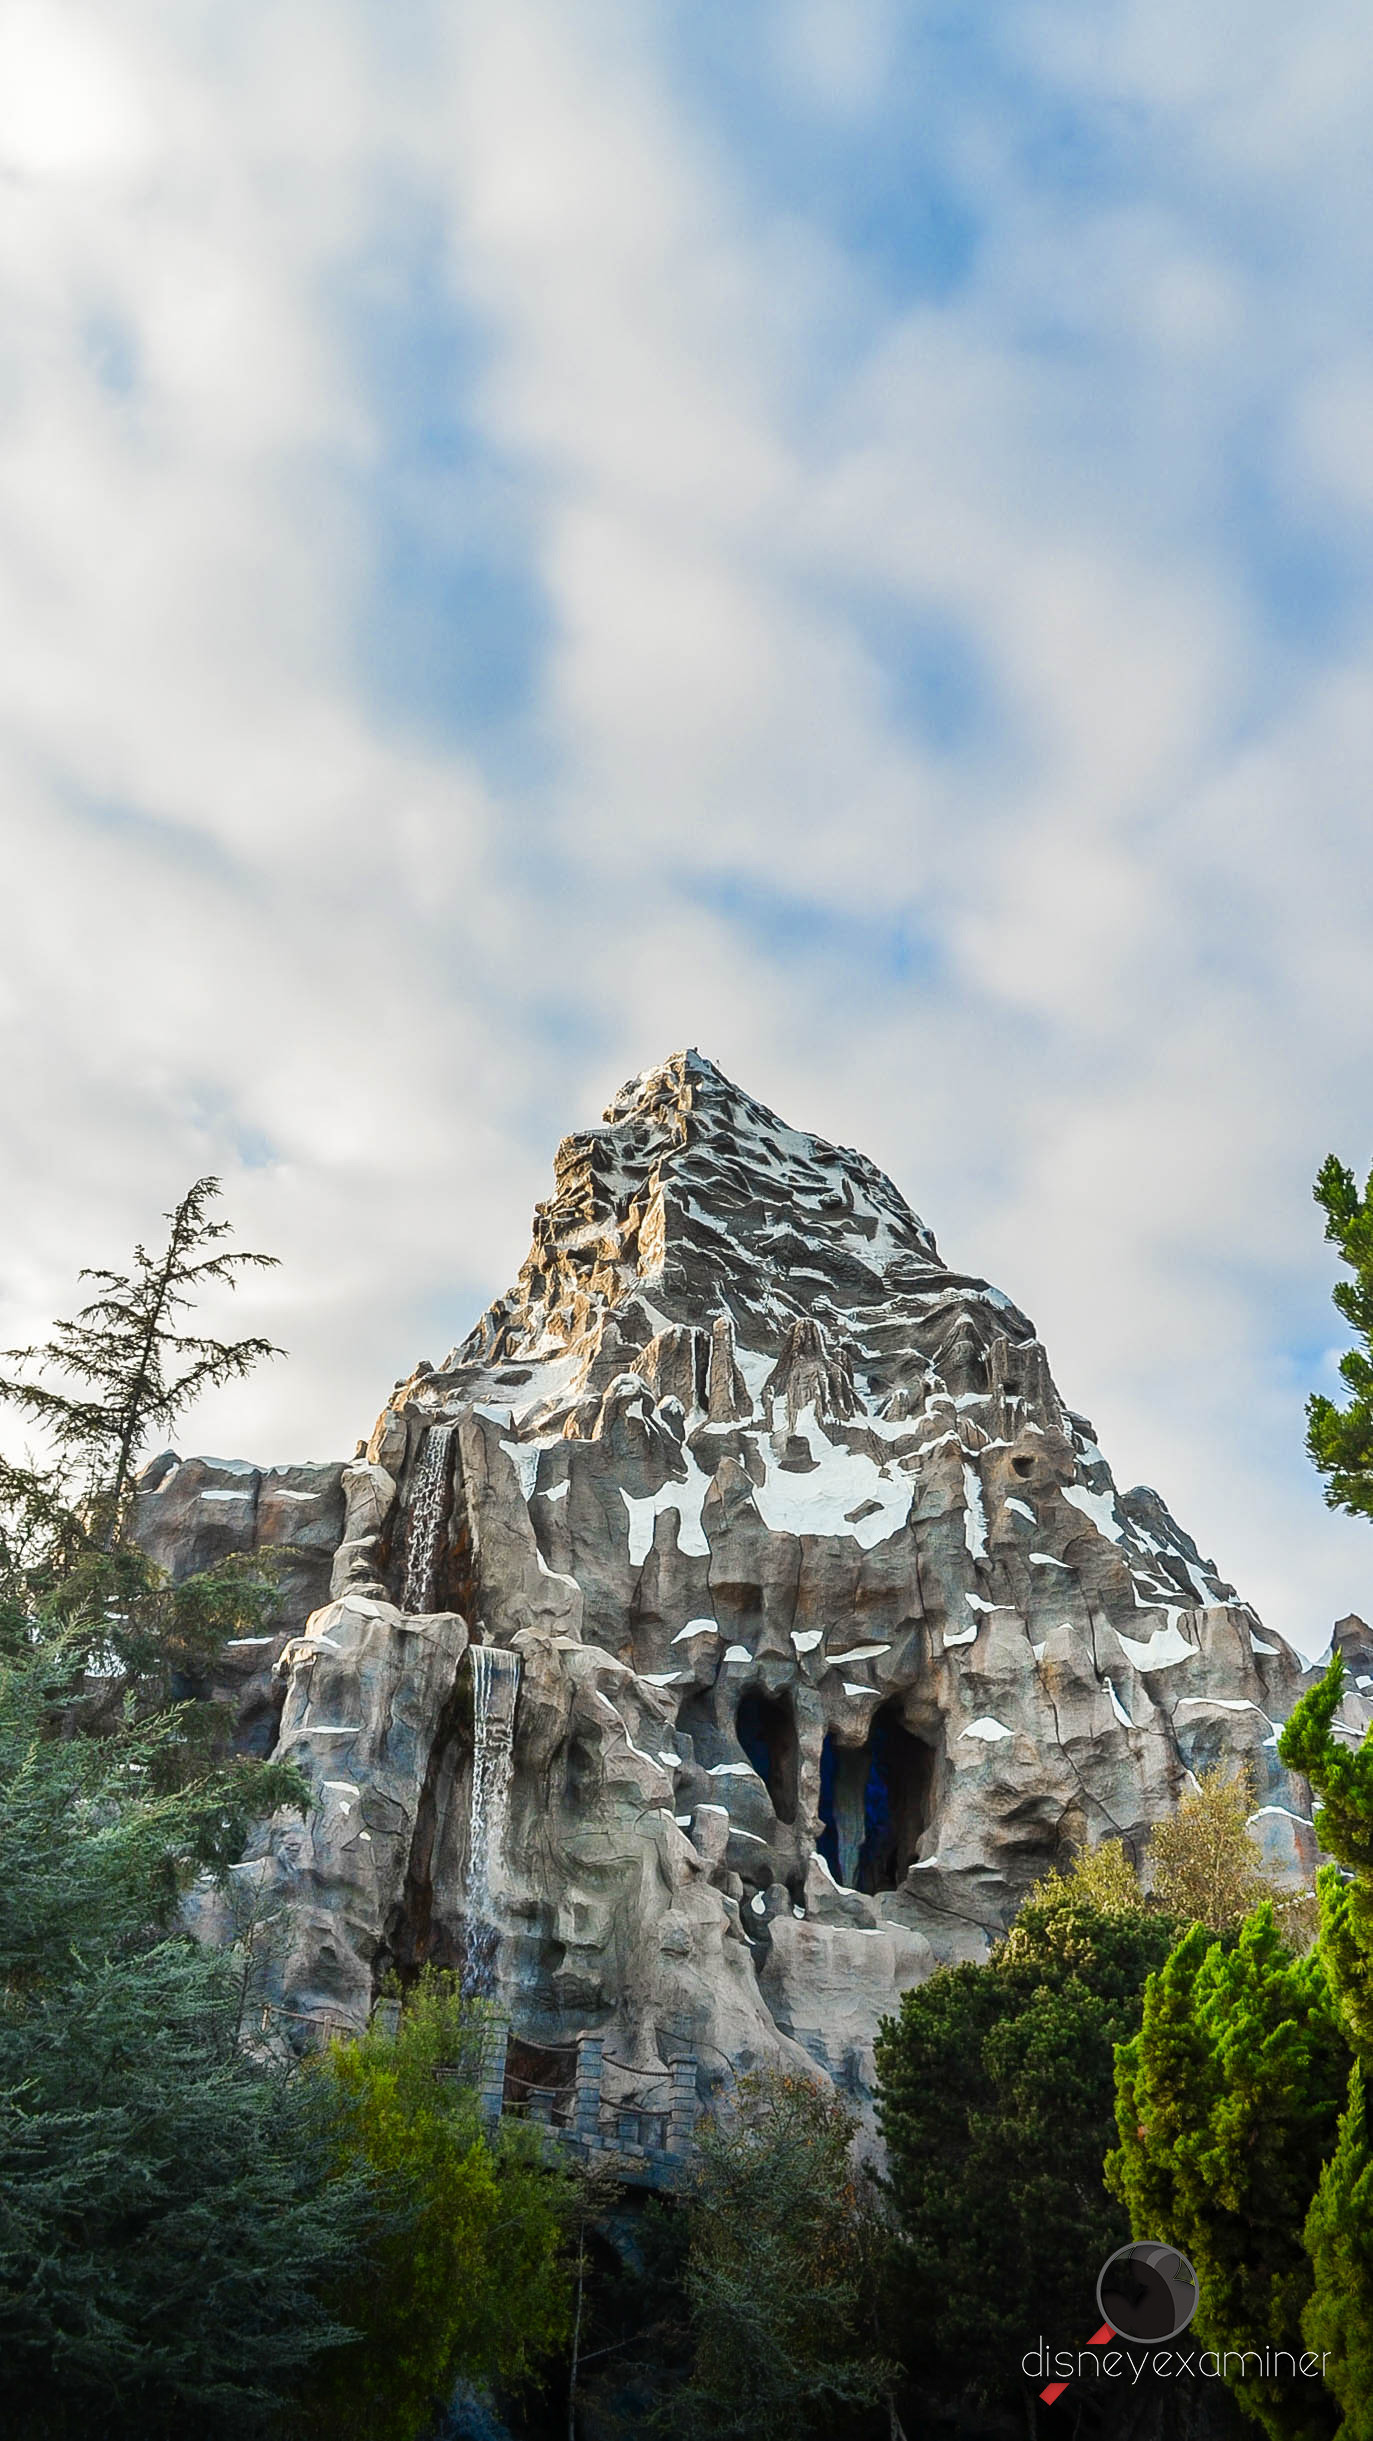 1373x2441 Disneyland Matterhorn Bobsleds Disneyexaminer Mobile Device Wallpaper